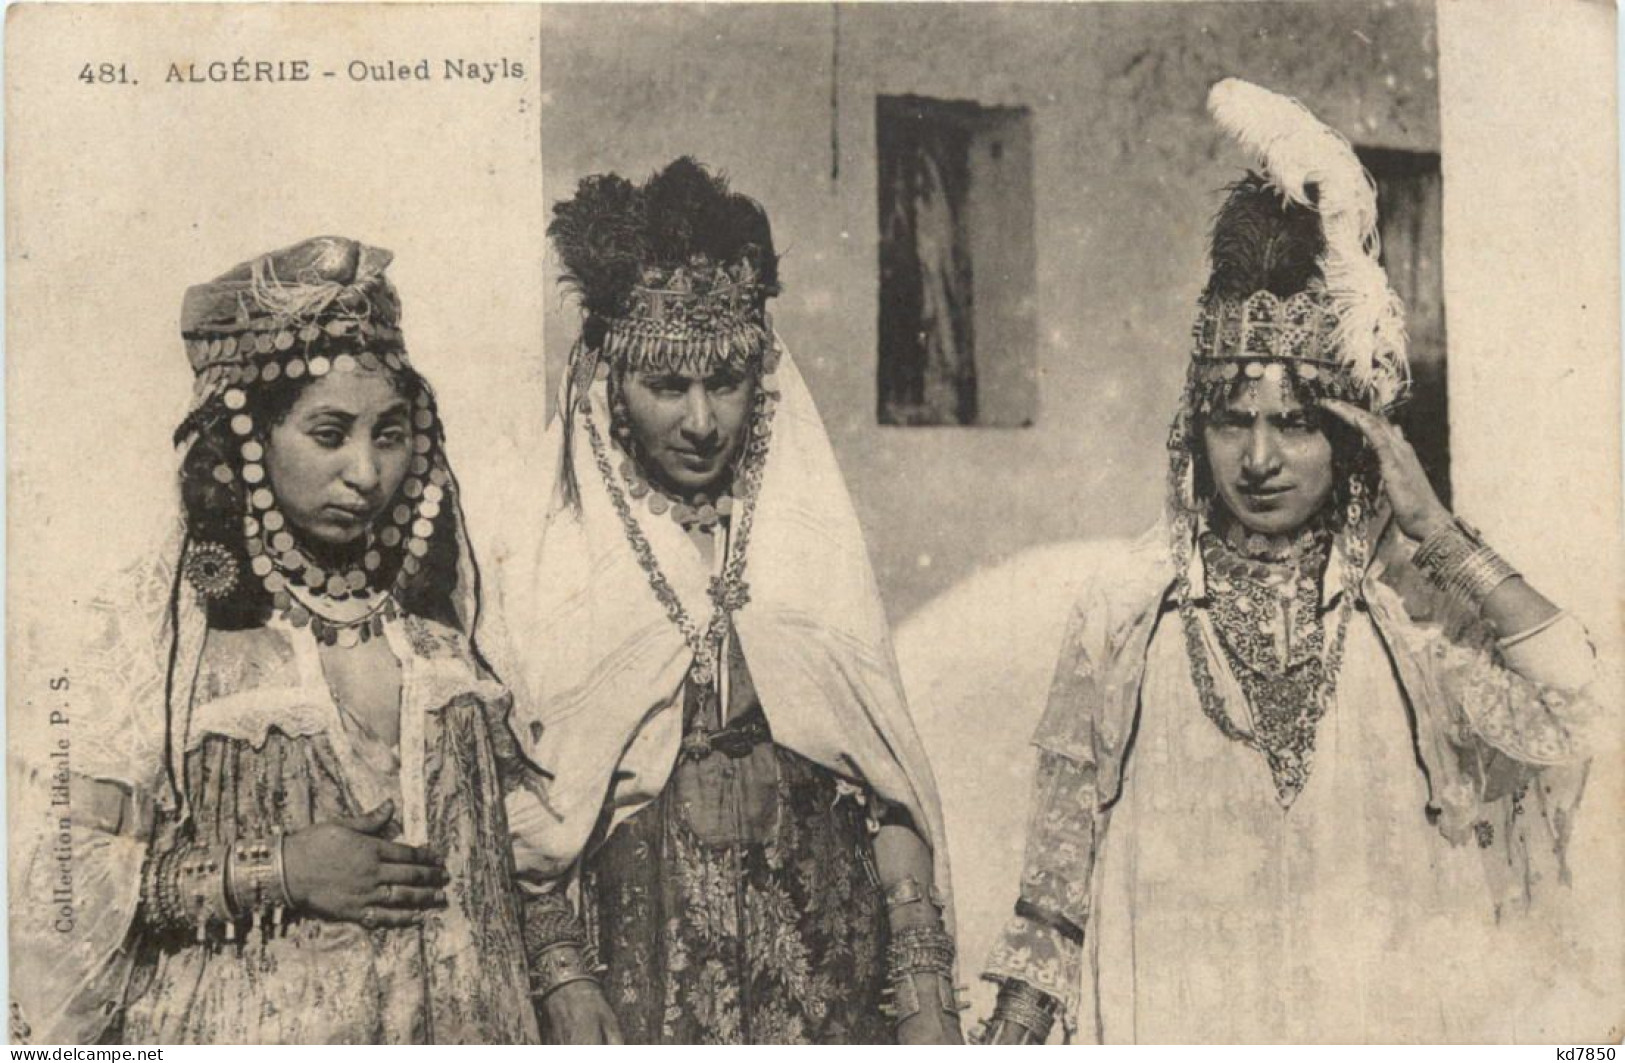 Algerie - Ouled Nayls - Women